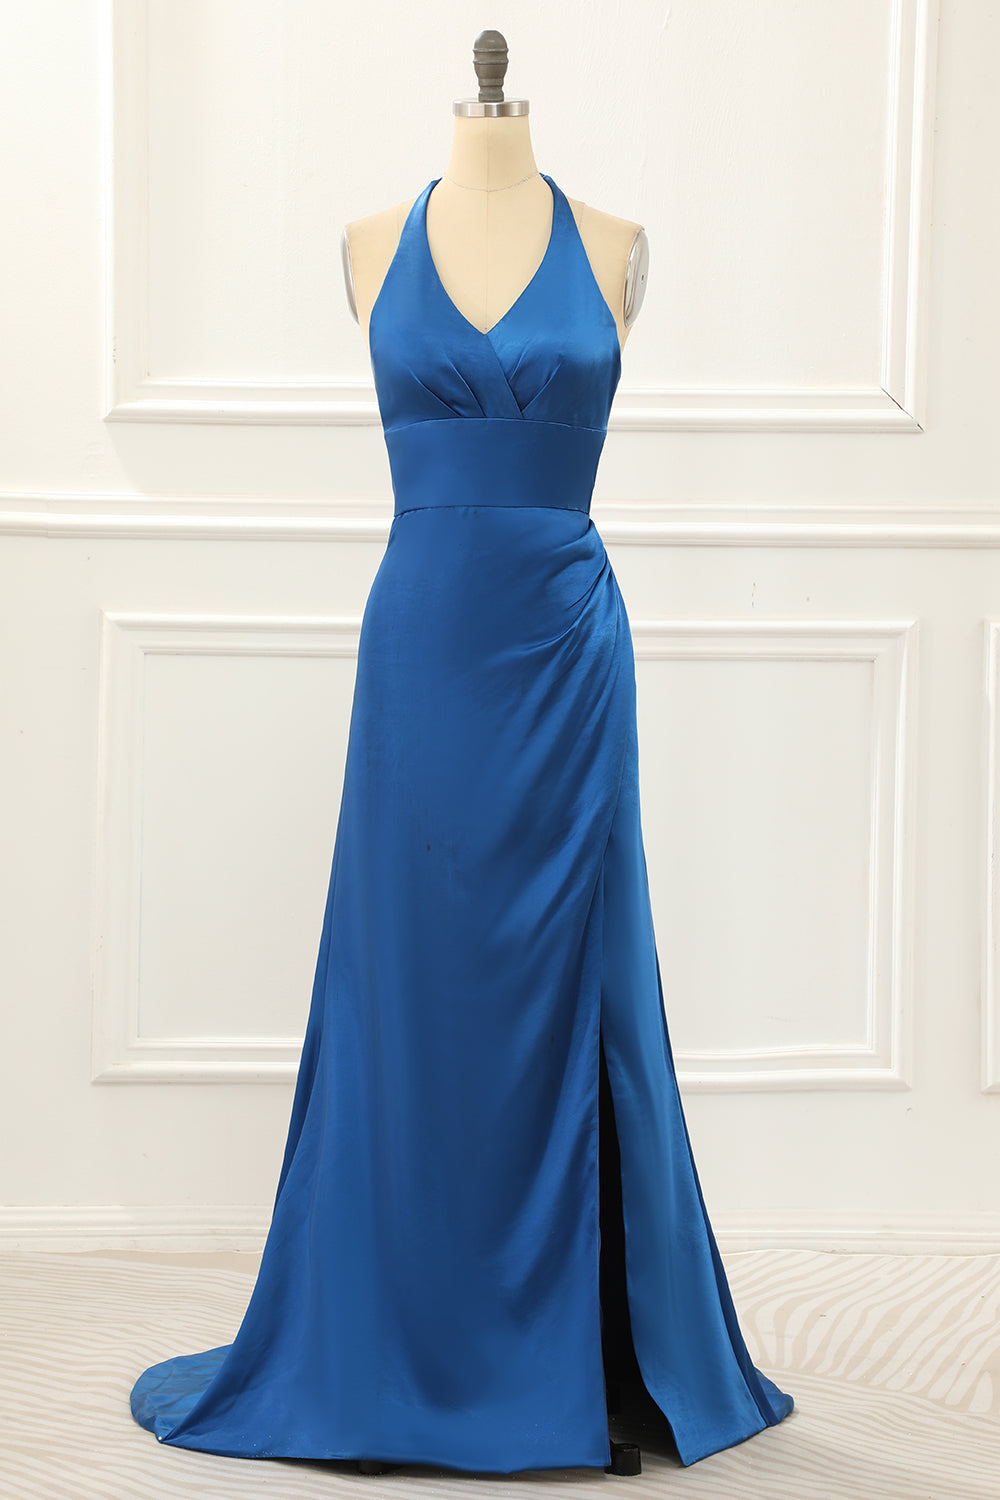 Bridesmaid Dress Sleeveless, Royal Blue Halter Simple Prom Dress with Slit